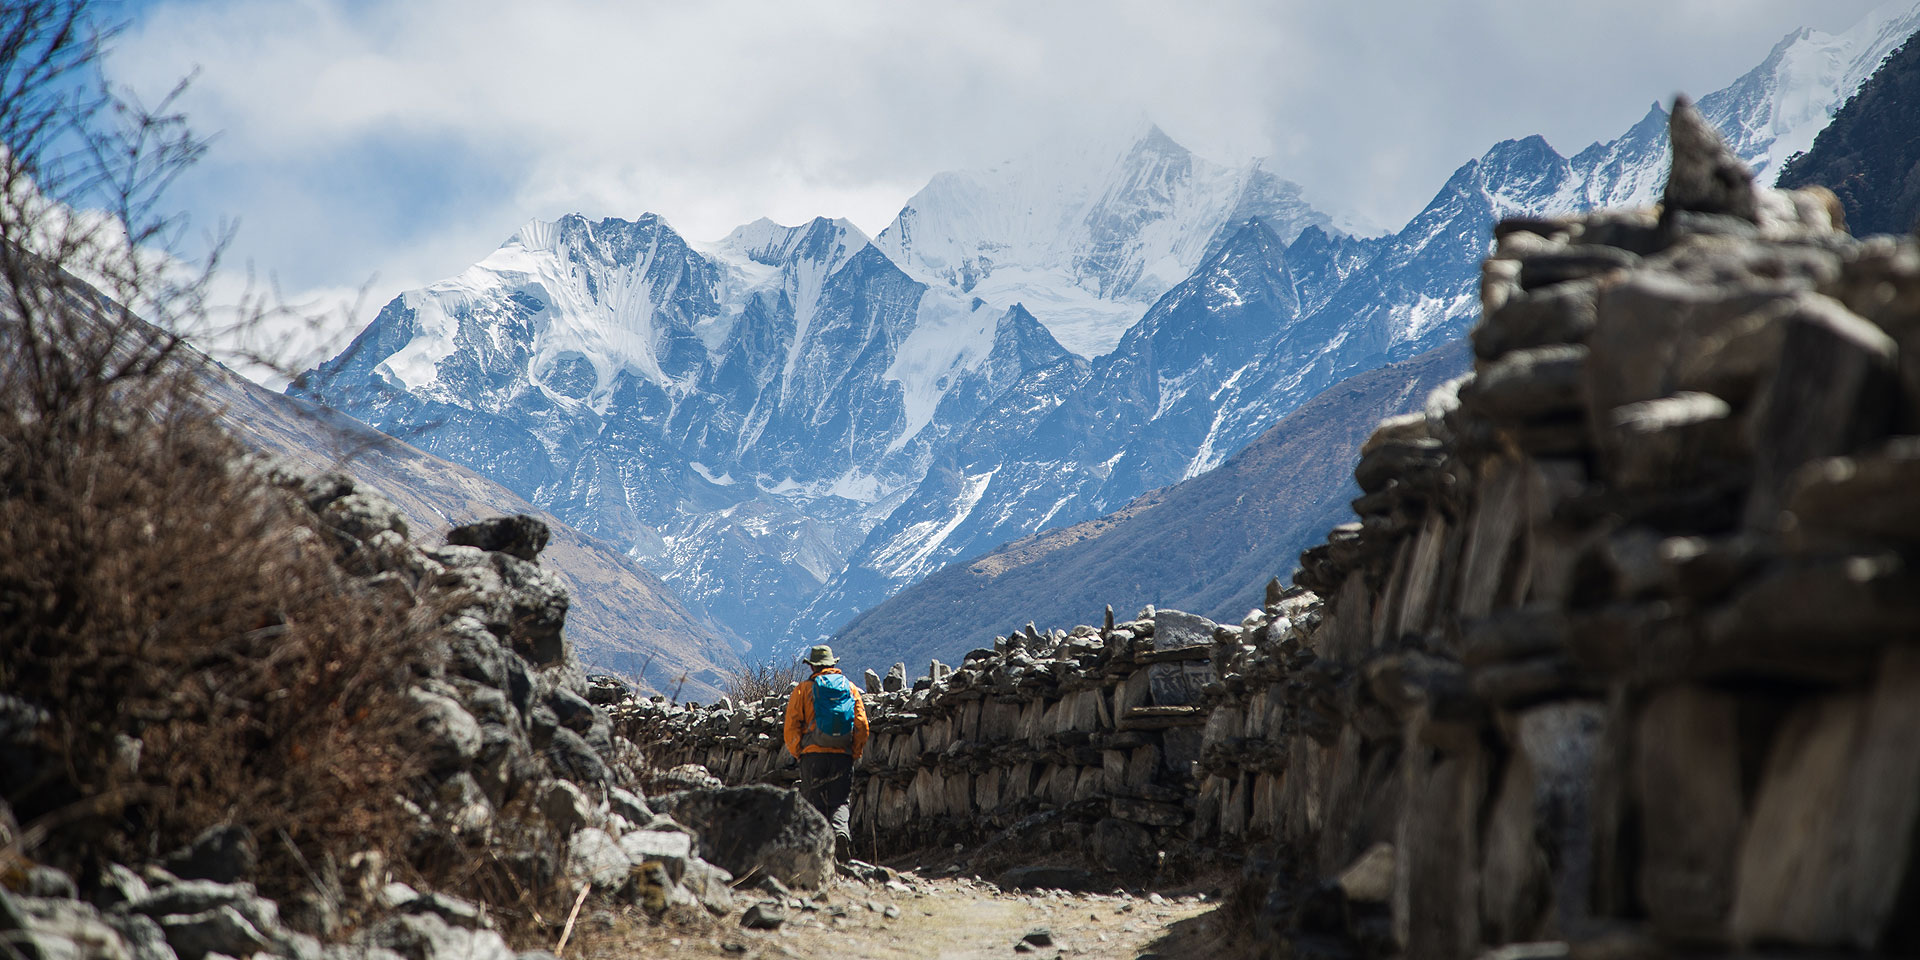 Great Mani (prayer) wall before Mundu trekking in the Langtang valley, Nepal